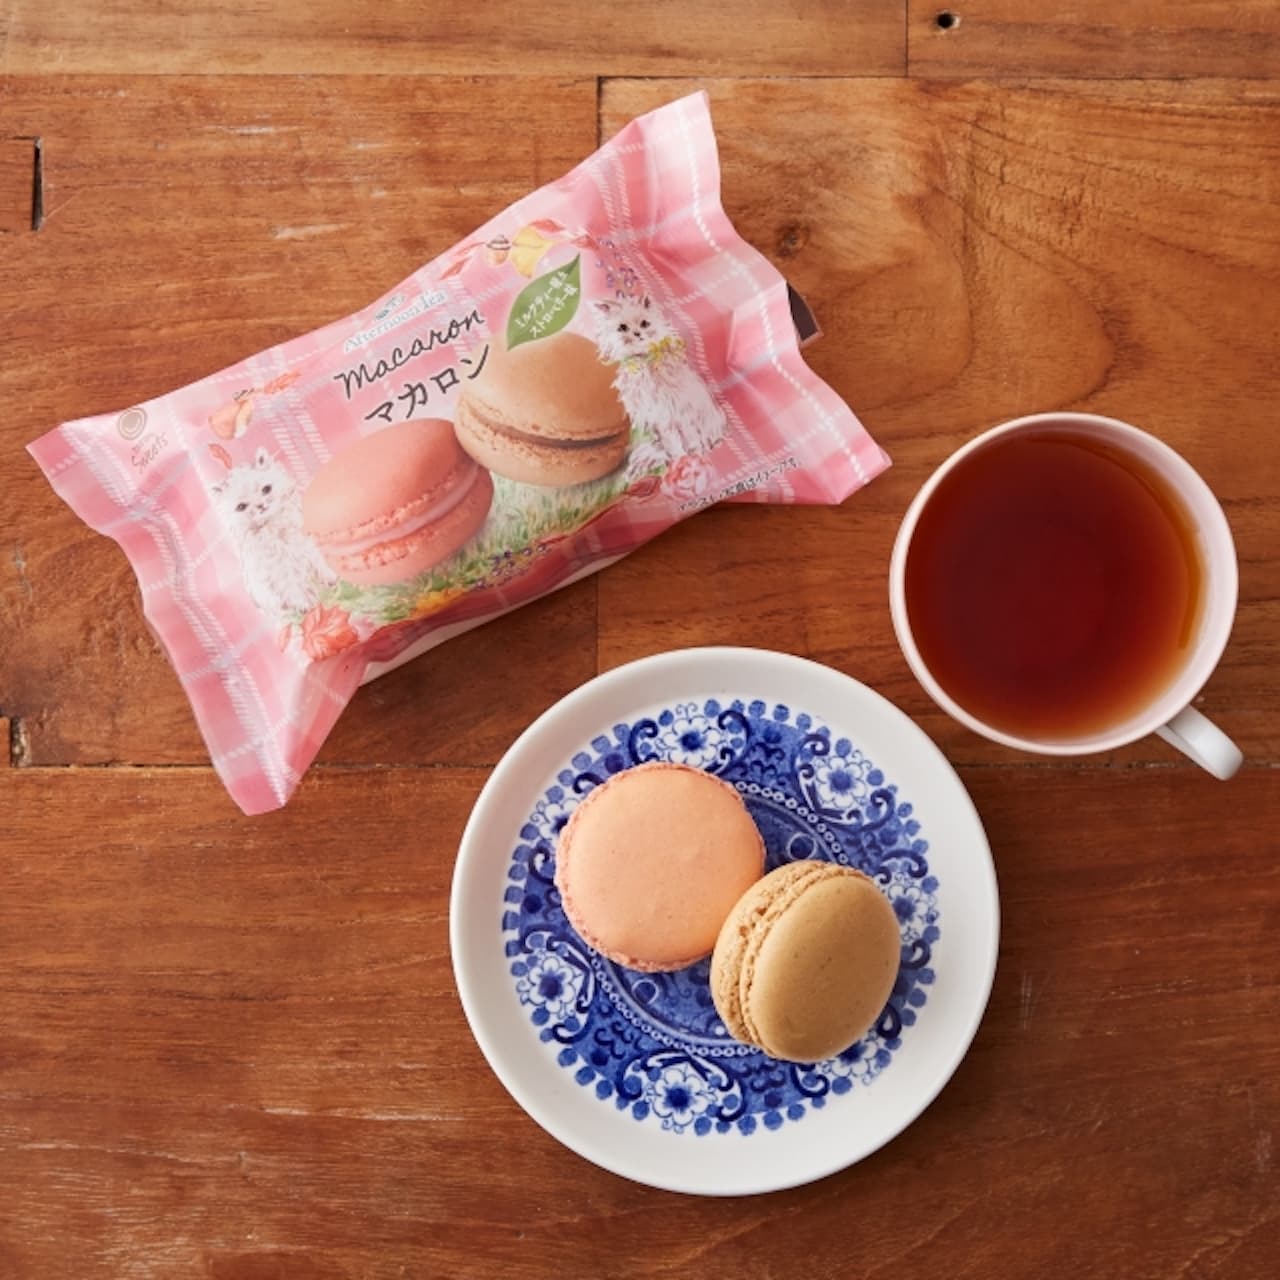 Macarons supervised by Afternoon Tea, milk tea flavor & strawberry flavor